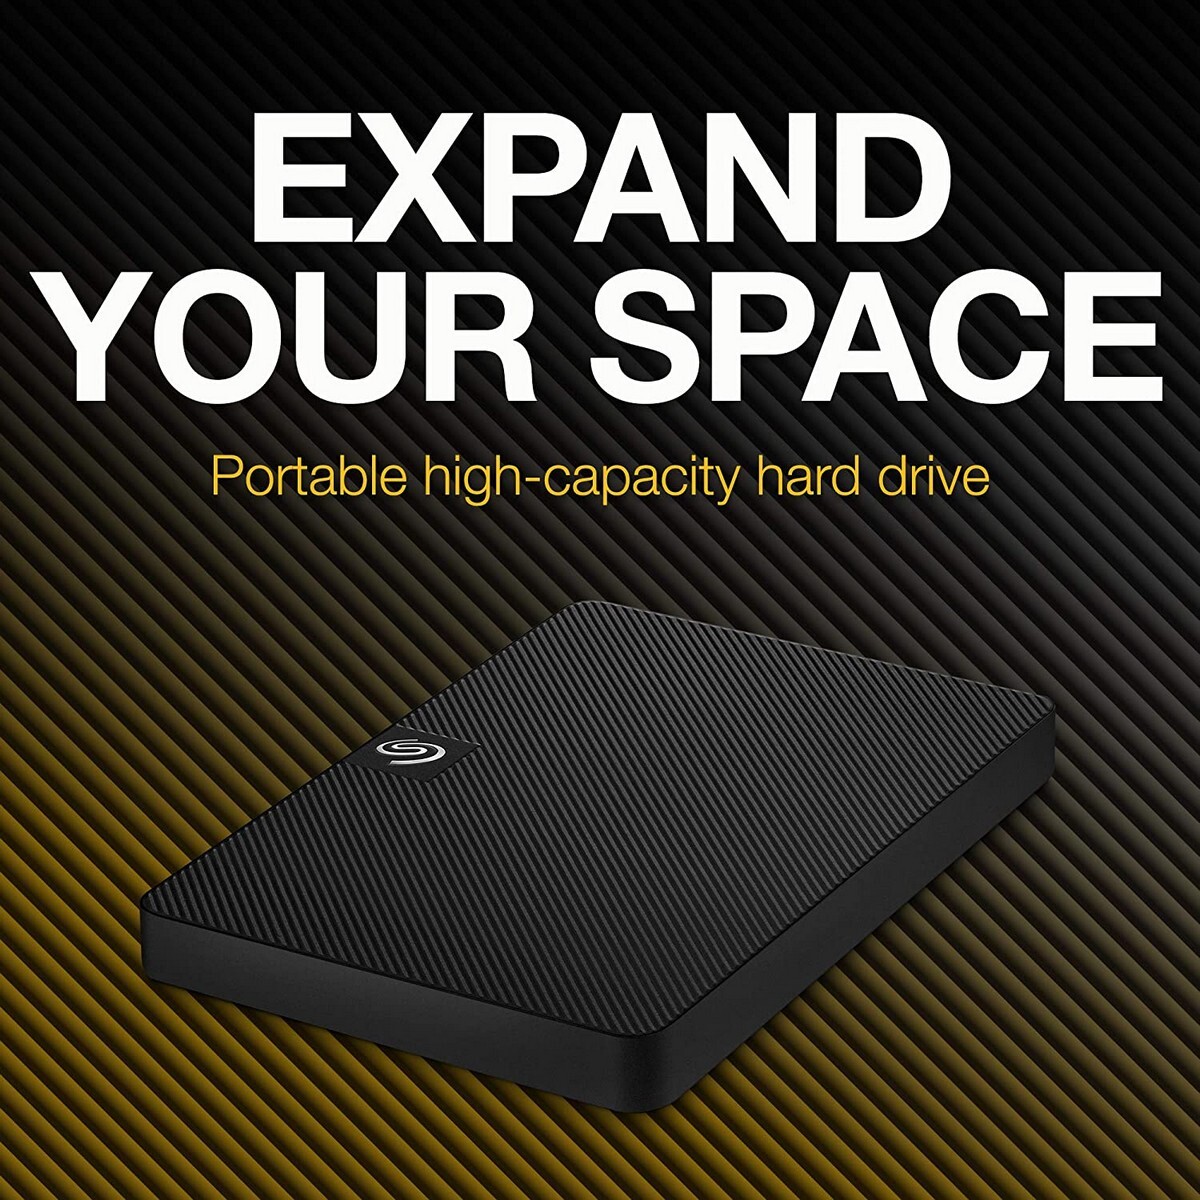 Seagate Expansion 1TB Portable External Hard Disk Drive Black